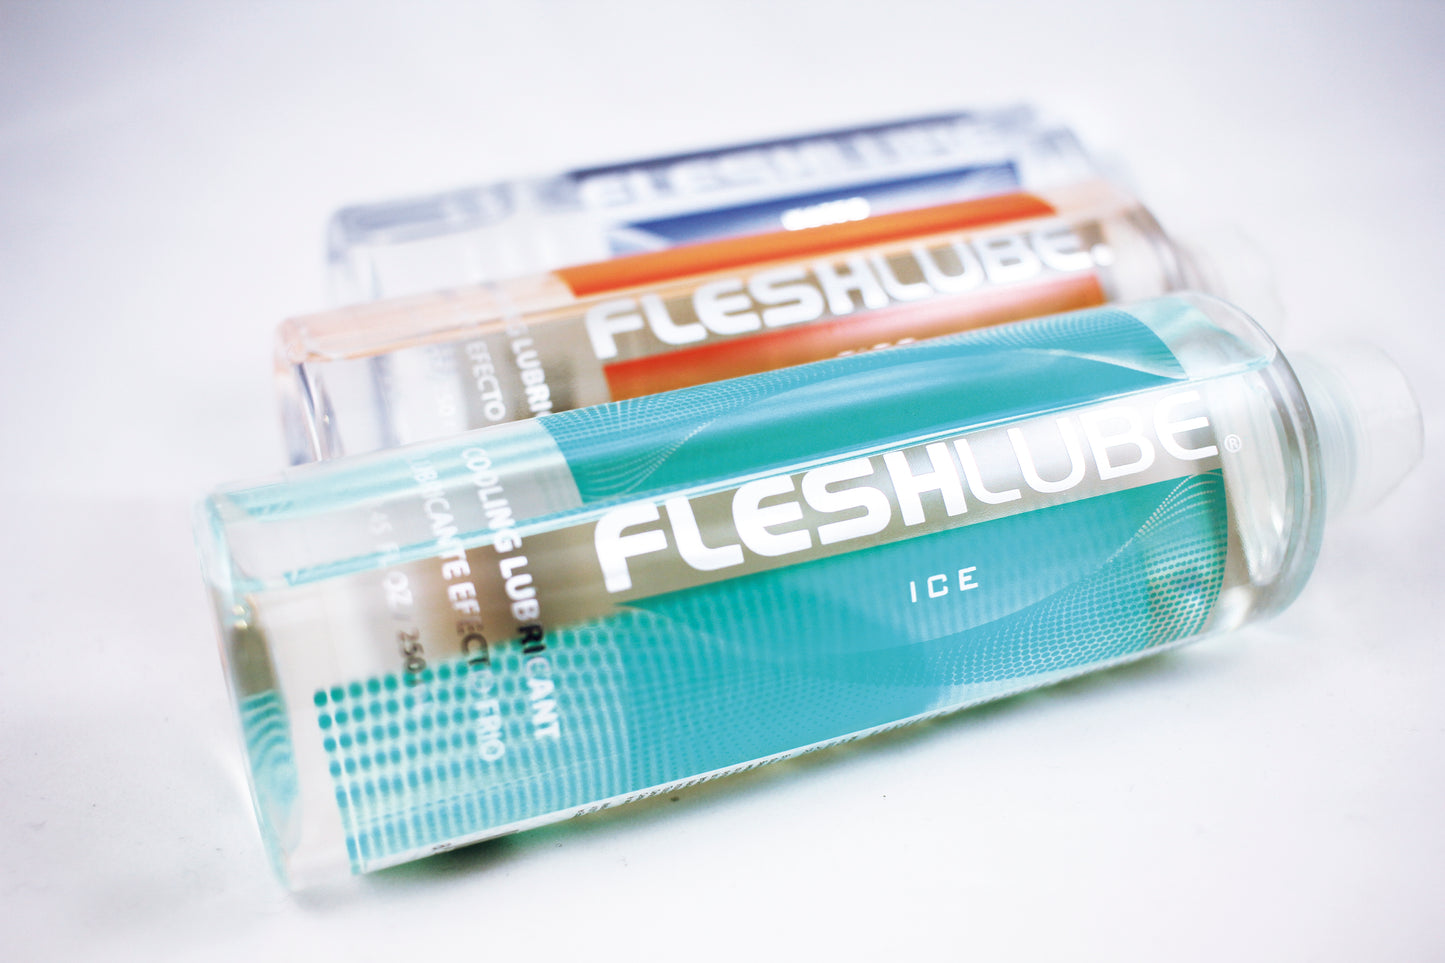 Fleshlube Ice 8 oz